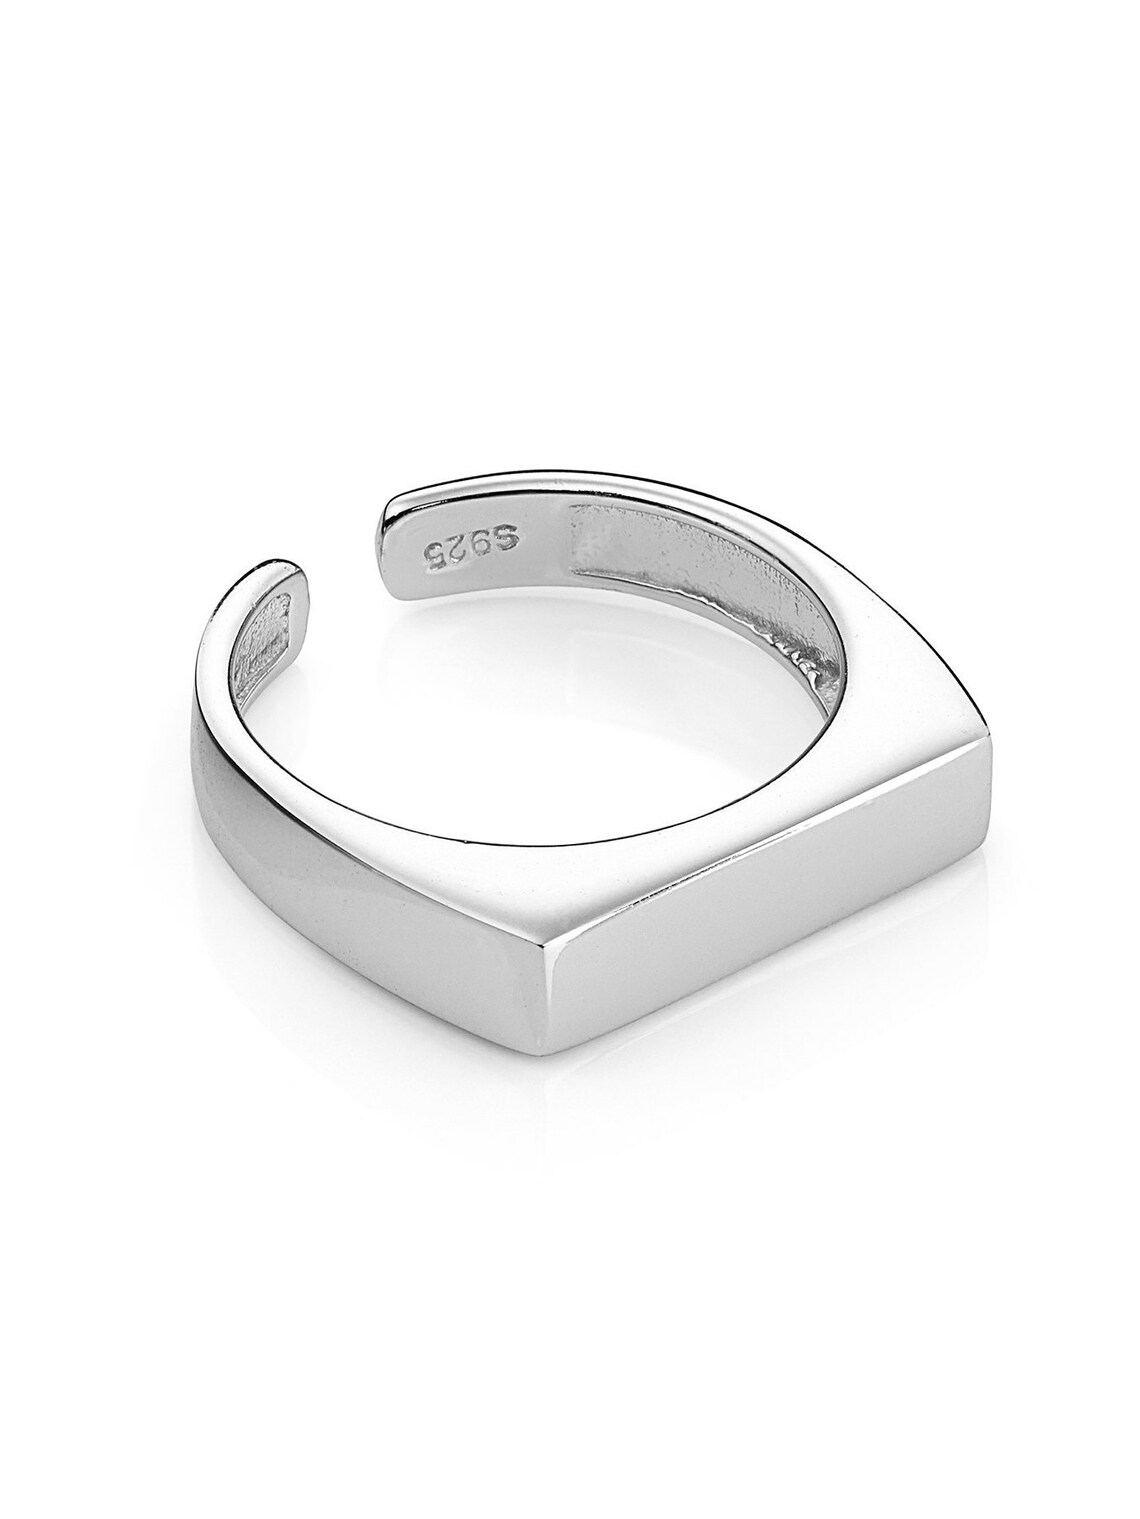 Adjustable Rectangular Signet Ring Sterling Silver | Etsy